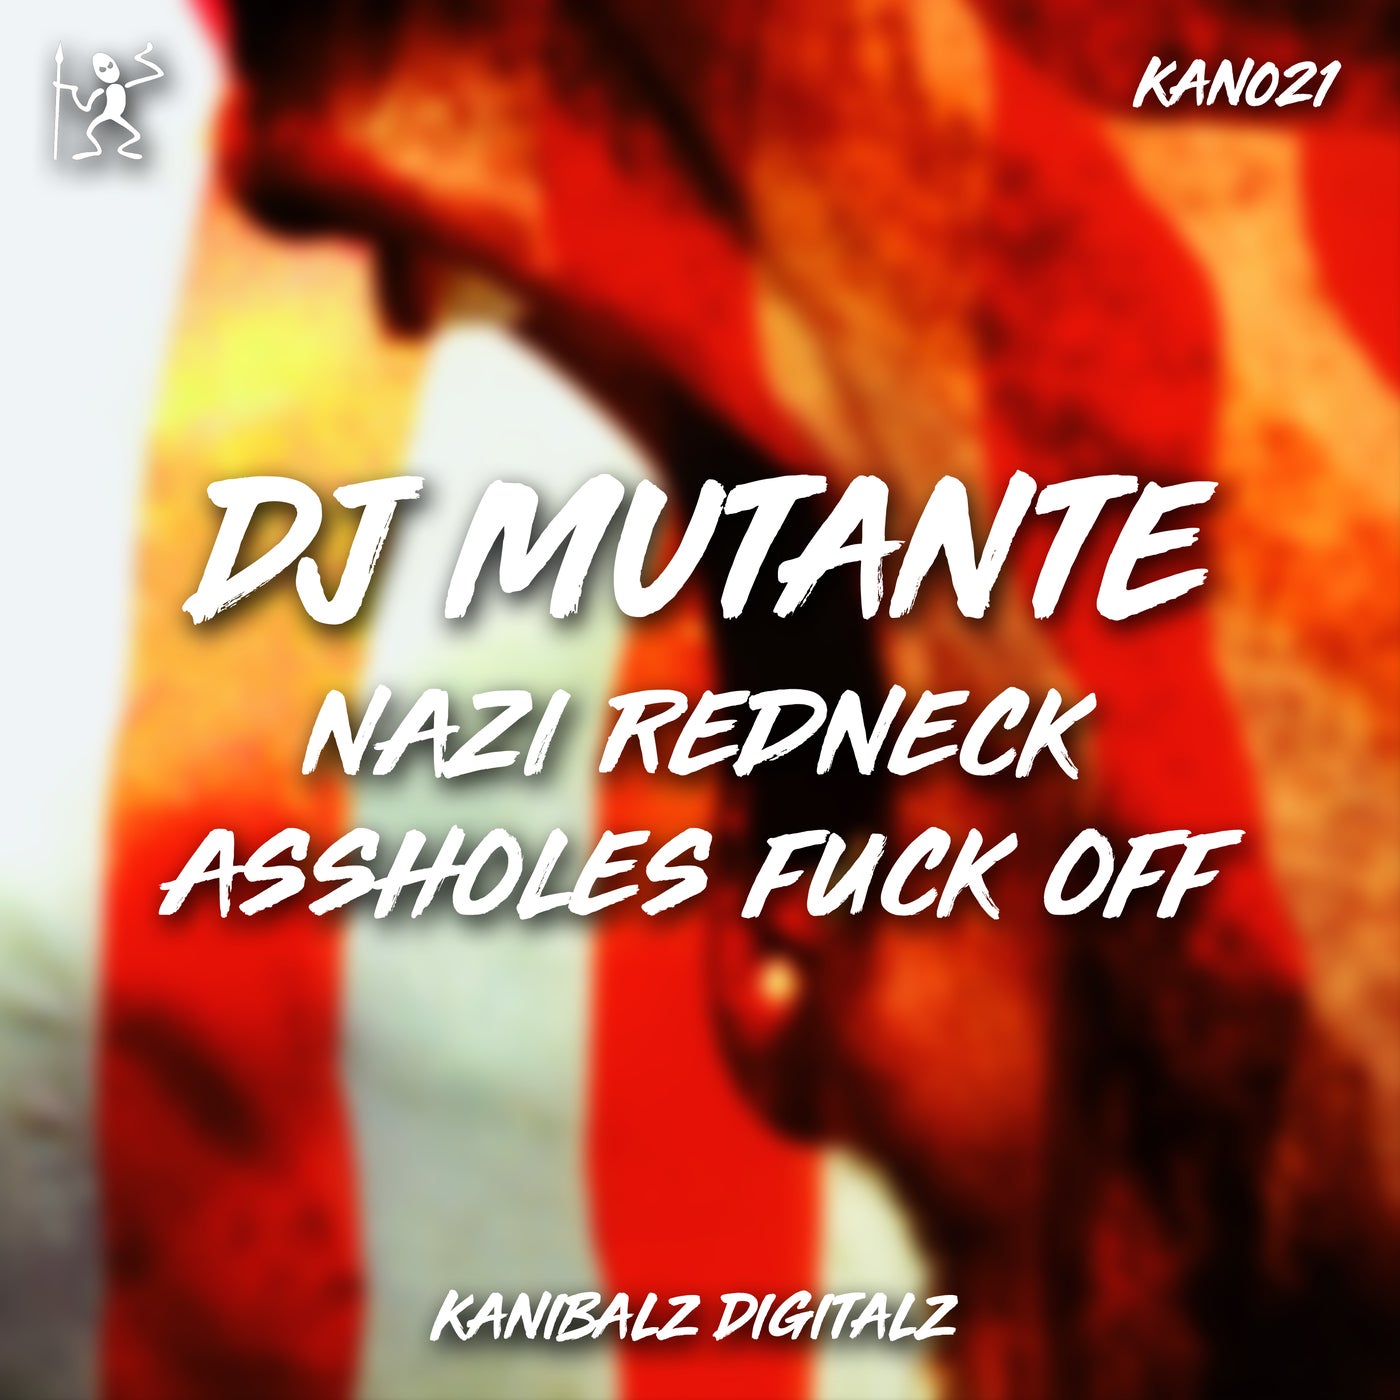 Nazi Redneck Assholes Fuck Off